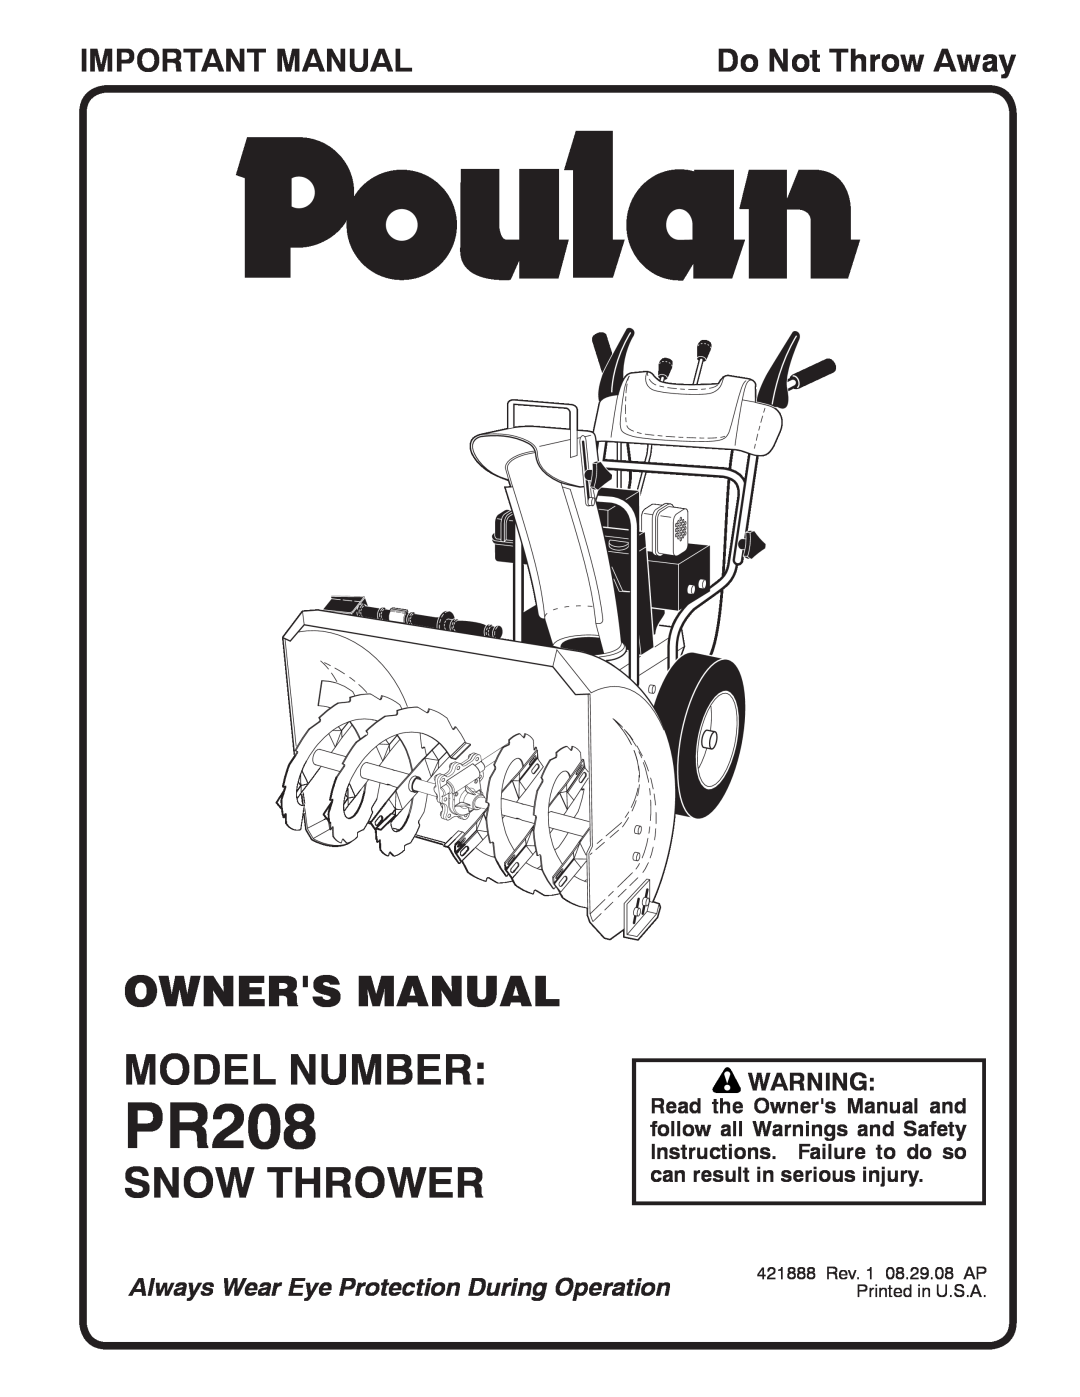 Poulan 421888 owner manual Snow Thrower, Important Manual, PR208, Do Not Throw Away 